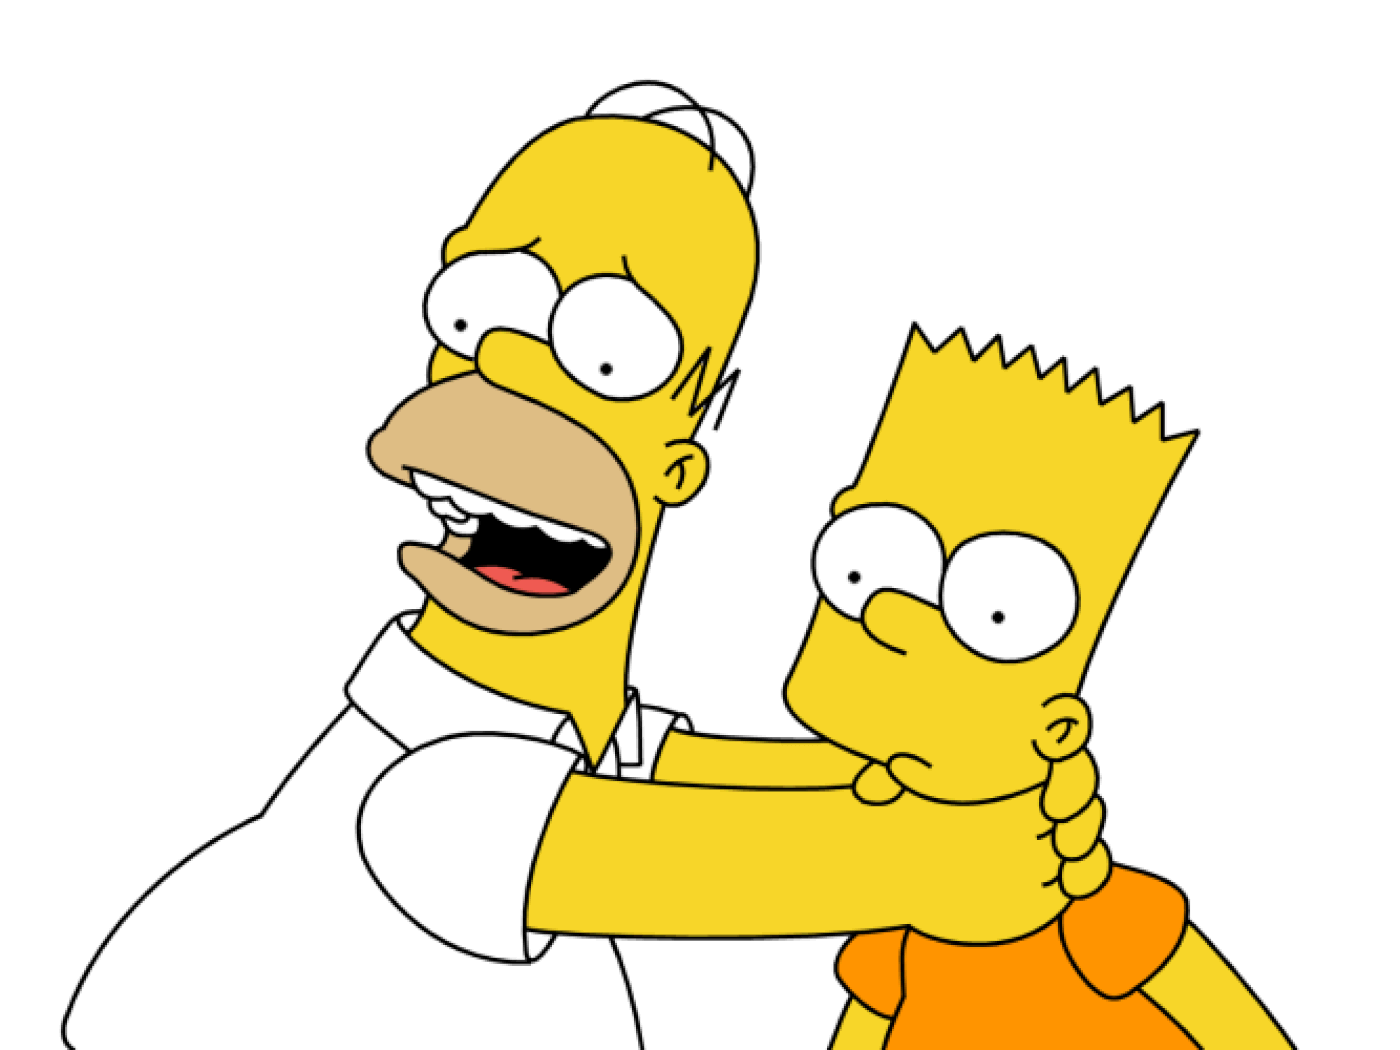 Credit: The Simpsons. 1989- Present. FOX.